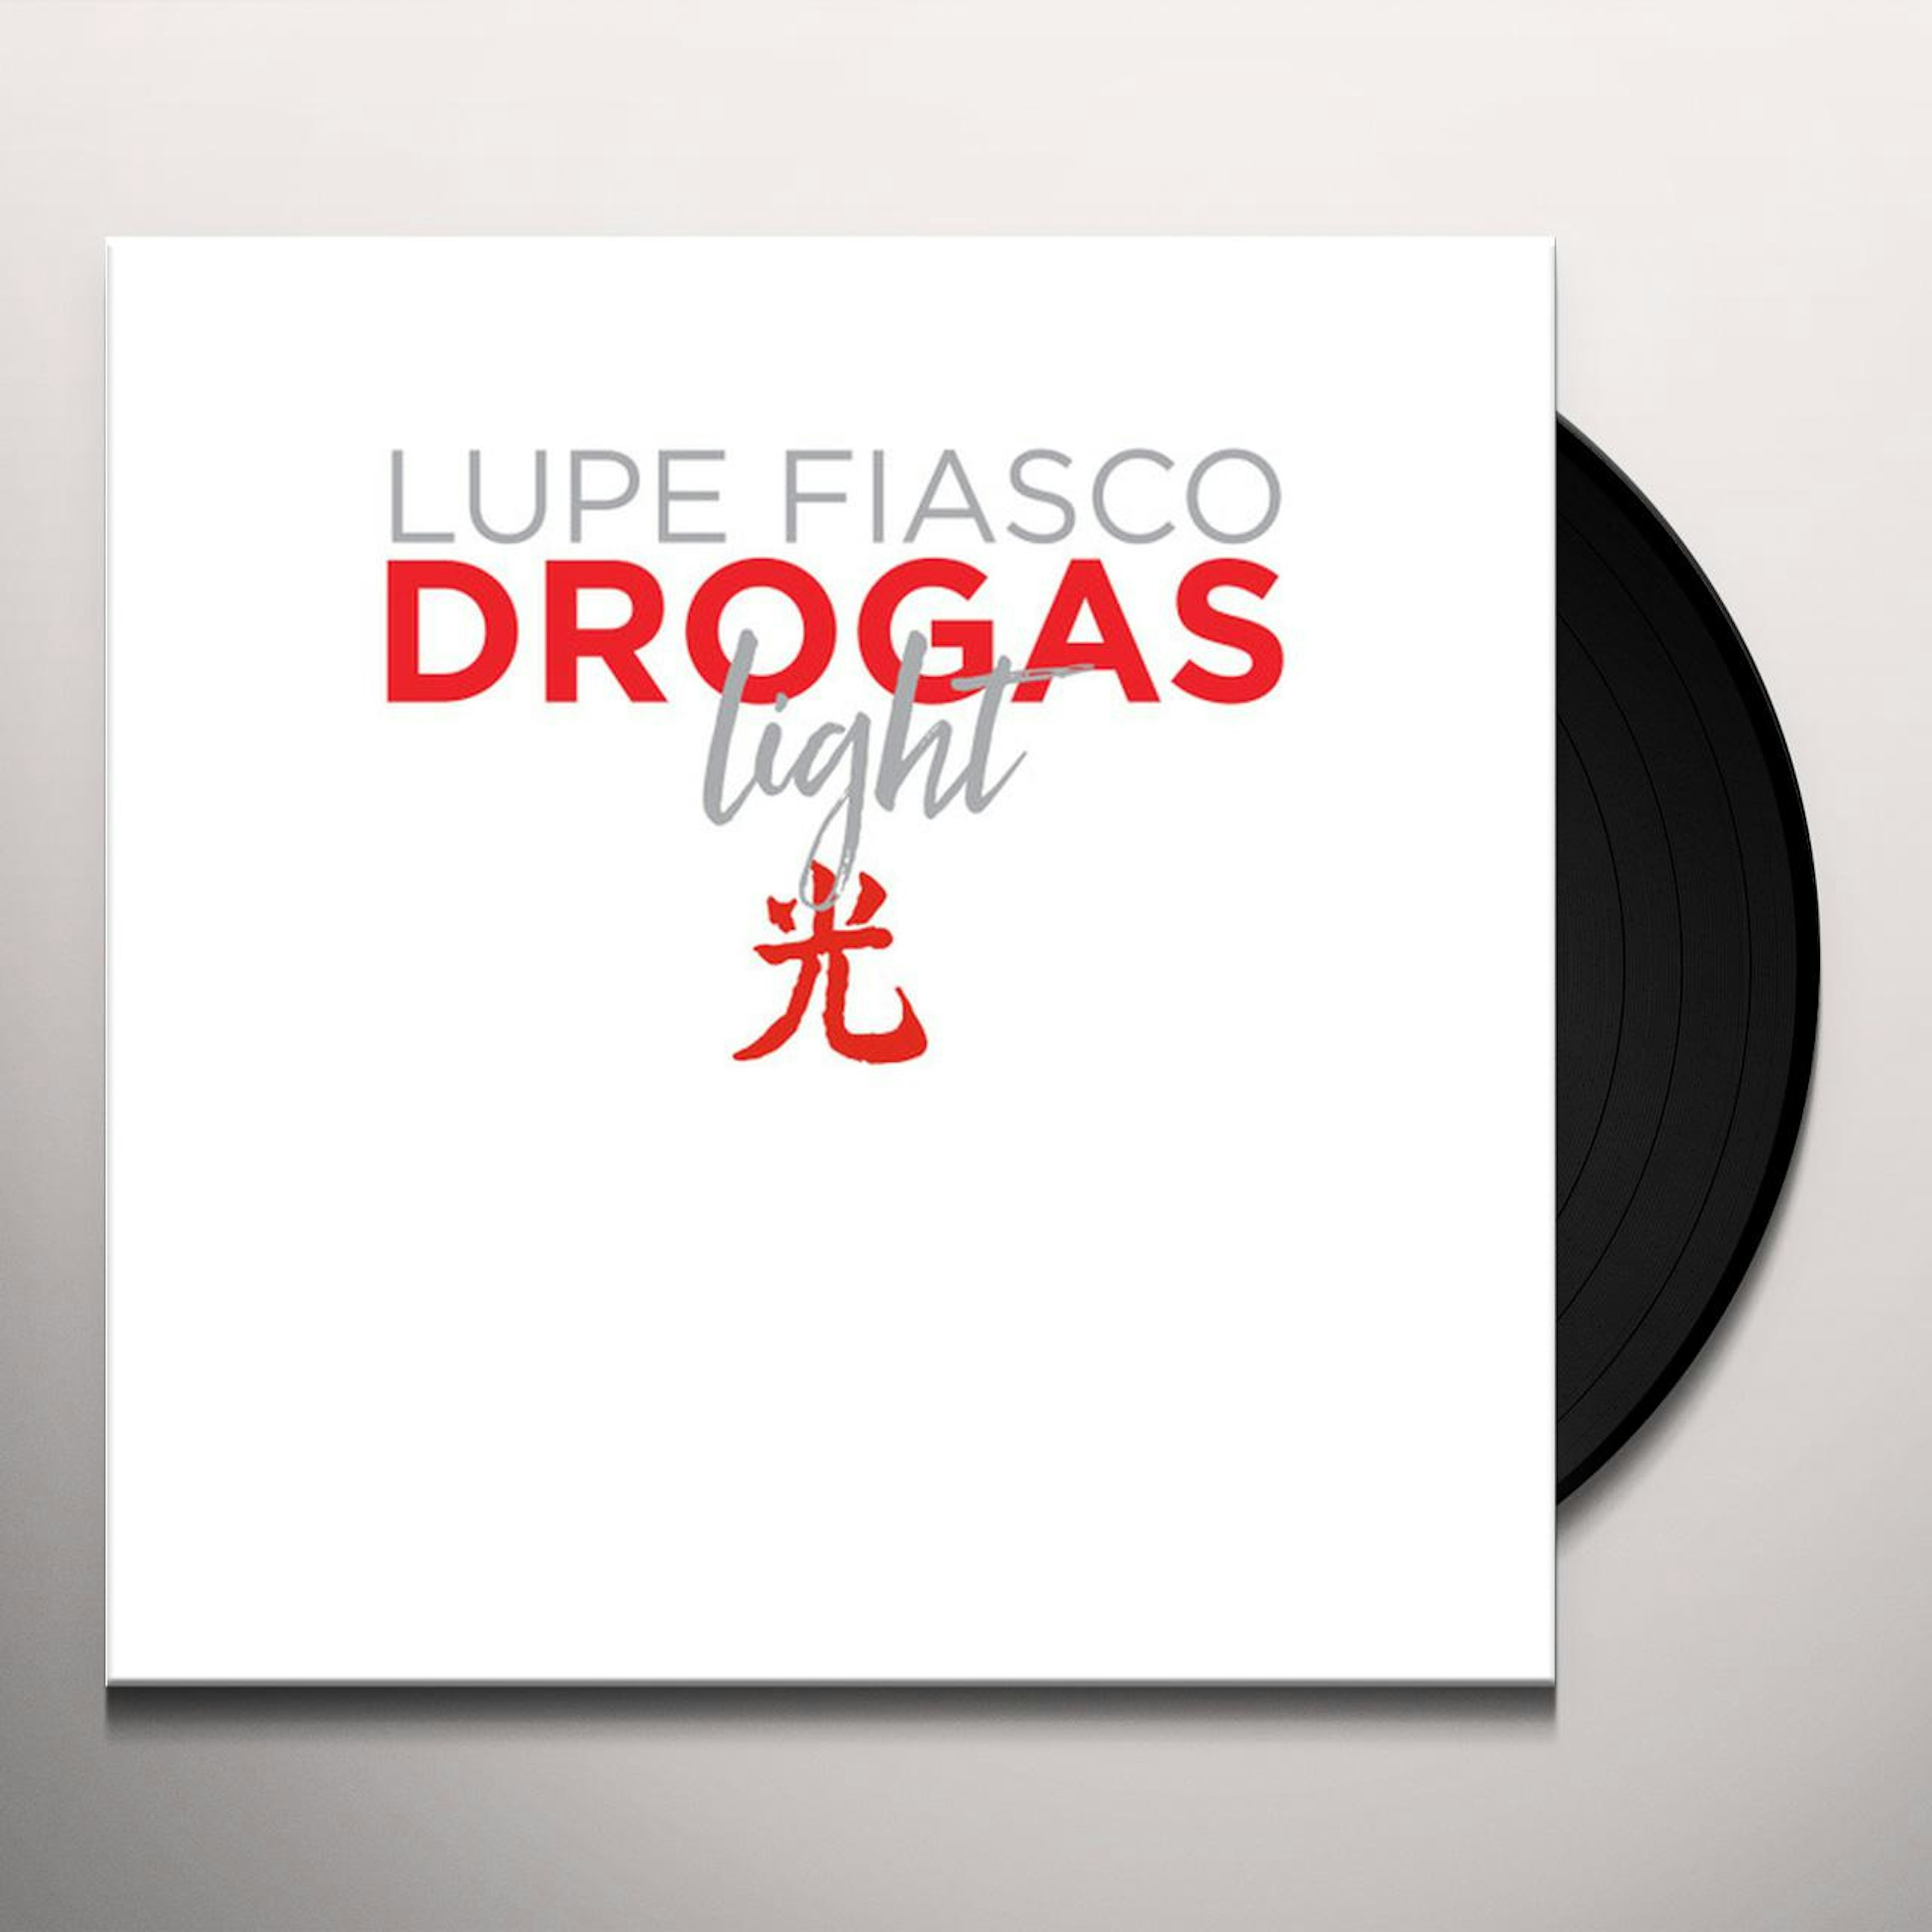 Bør besked Blænding Lupe Fiasco DROGAS Light Vinyl Record